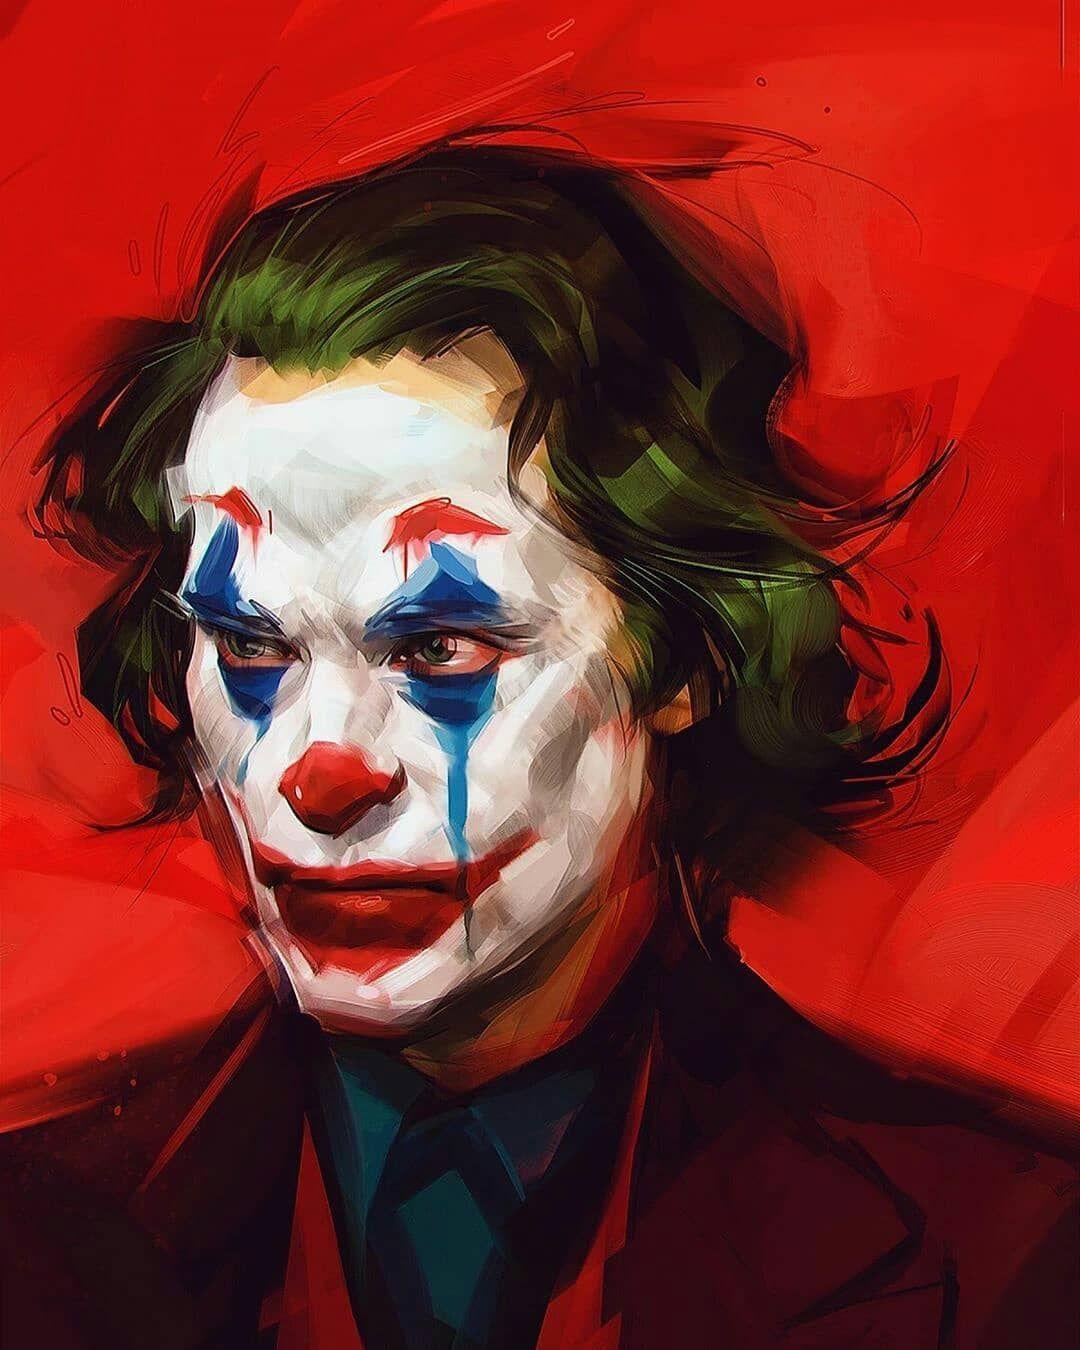 Joker Painting Wallpapers - Top Free Joker Painting Backgrounds ...